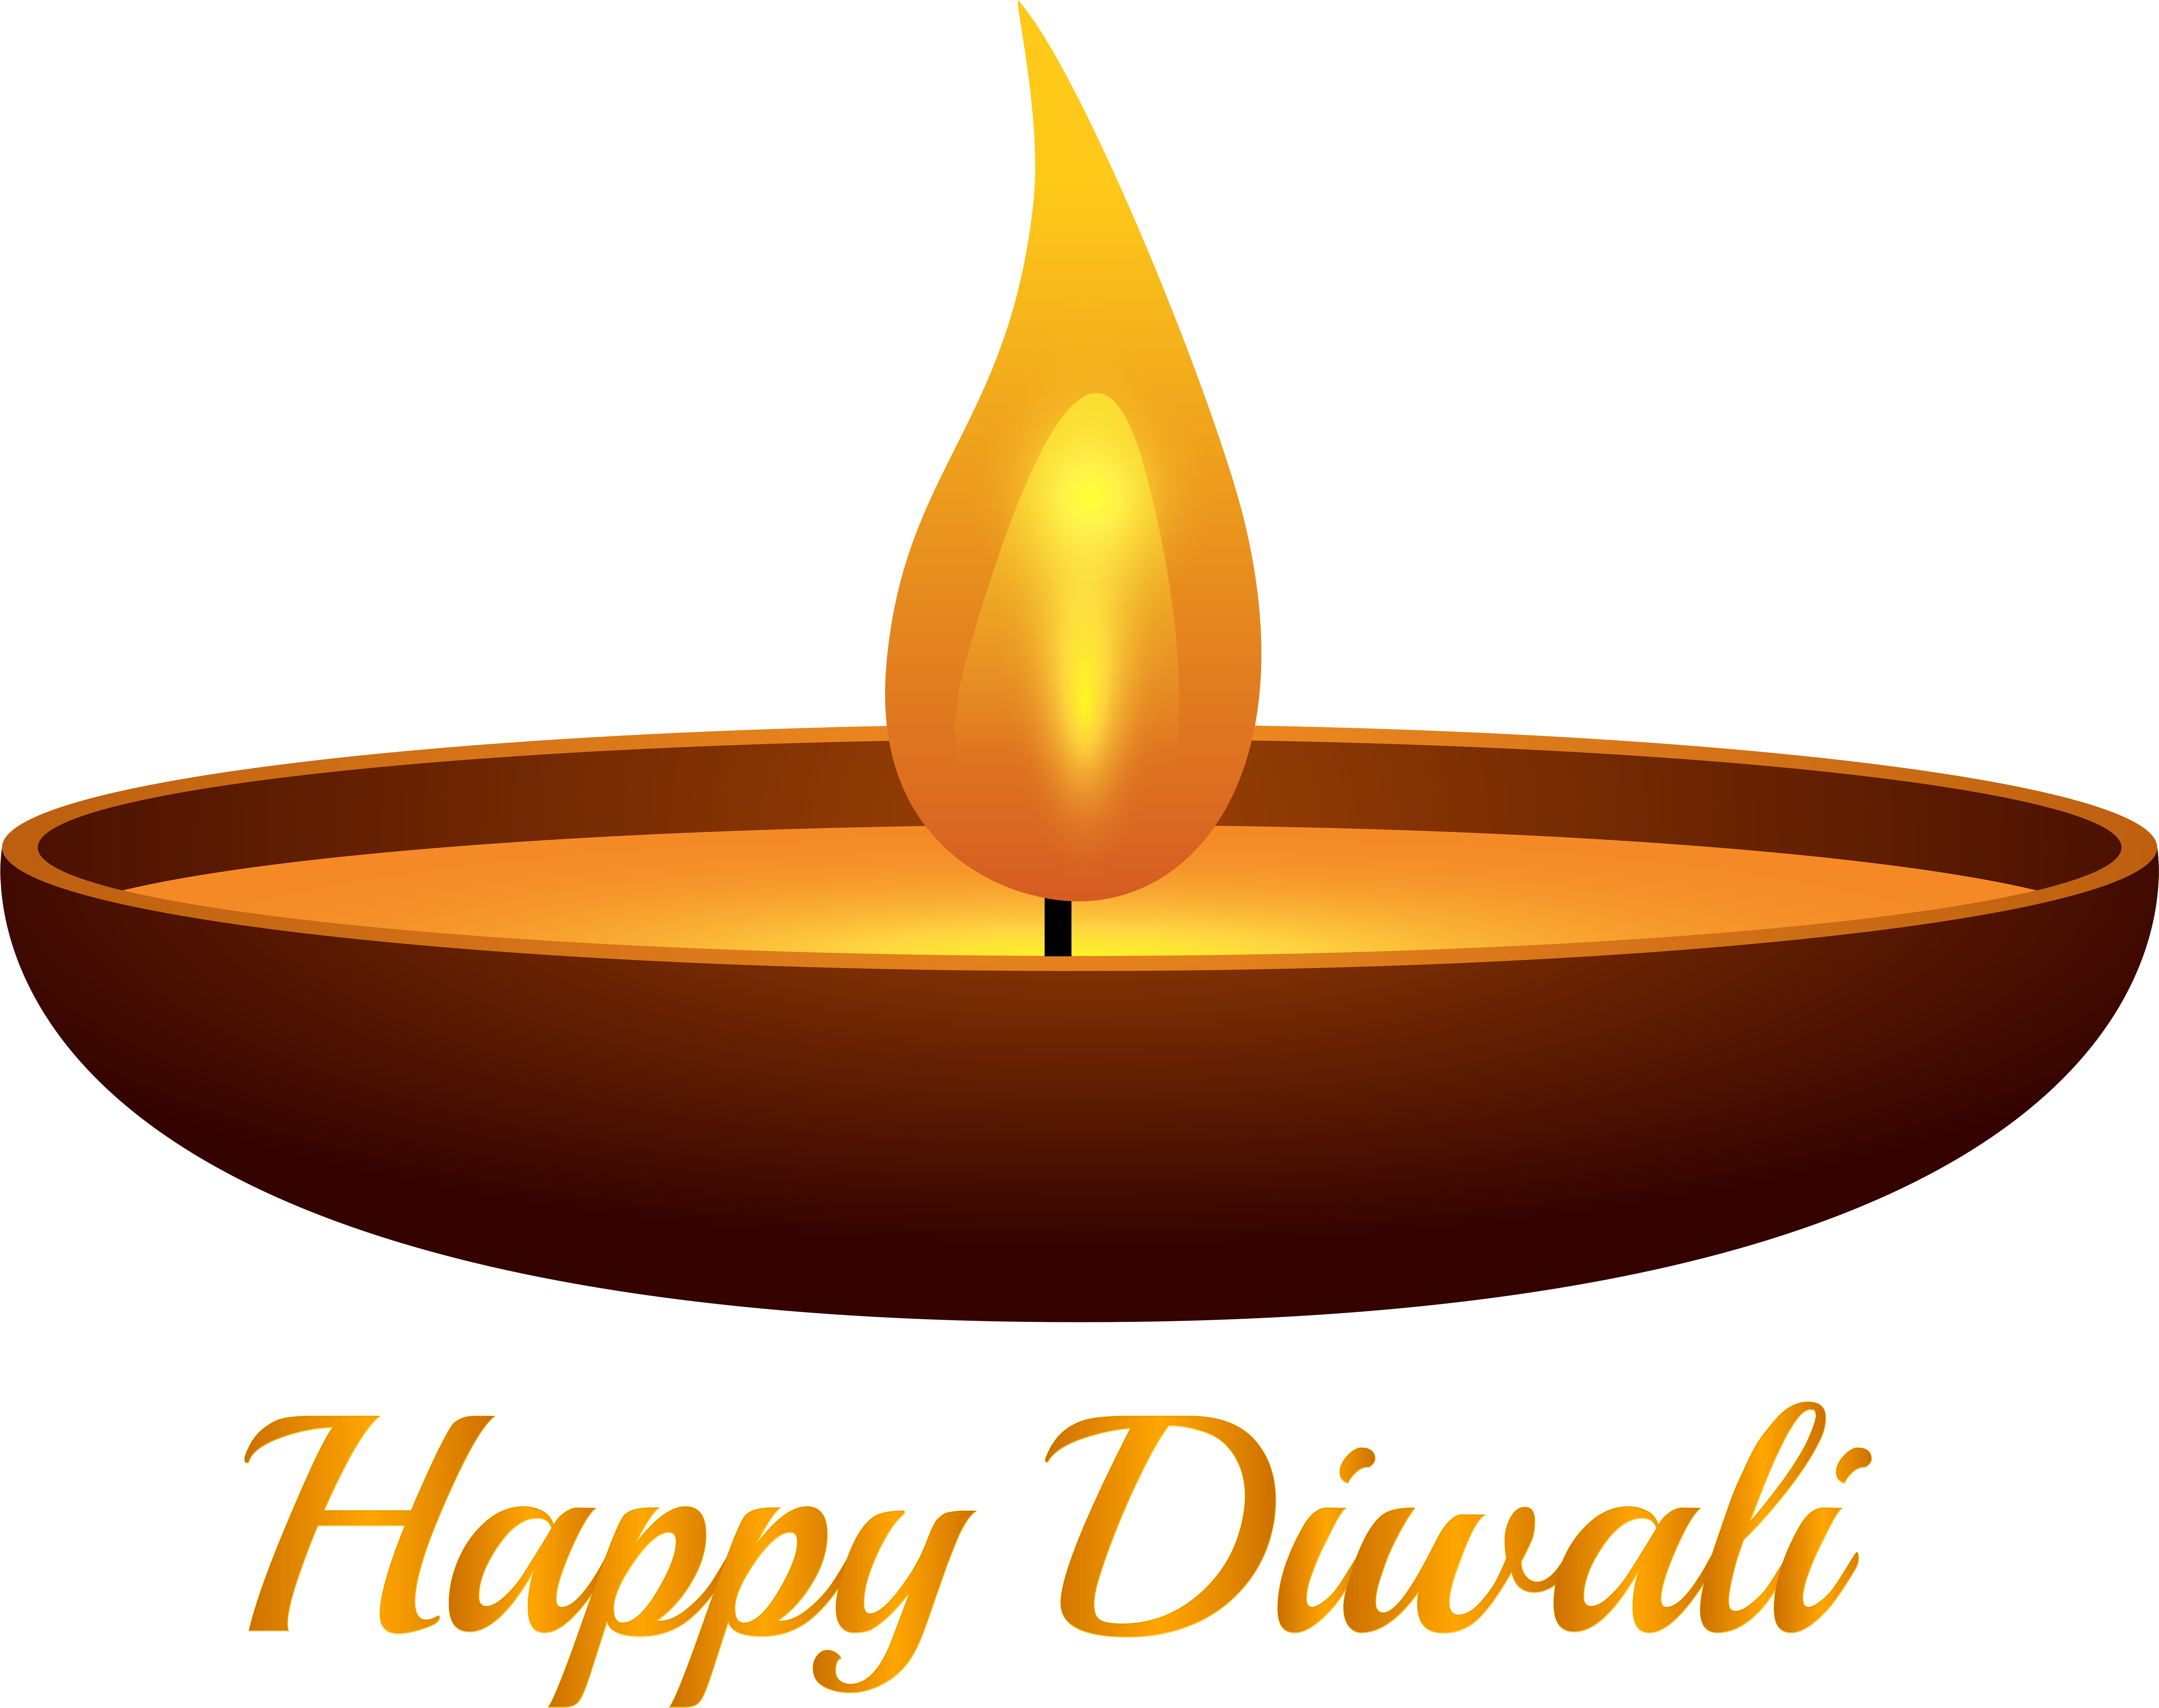 Happy Diwali Candle Png Clip Art Image - Happy Diwali Candle Png Clip Art Image (8000x6327)